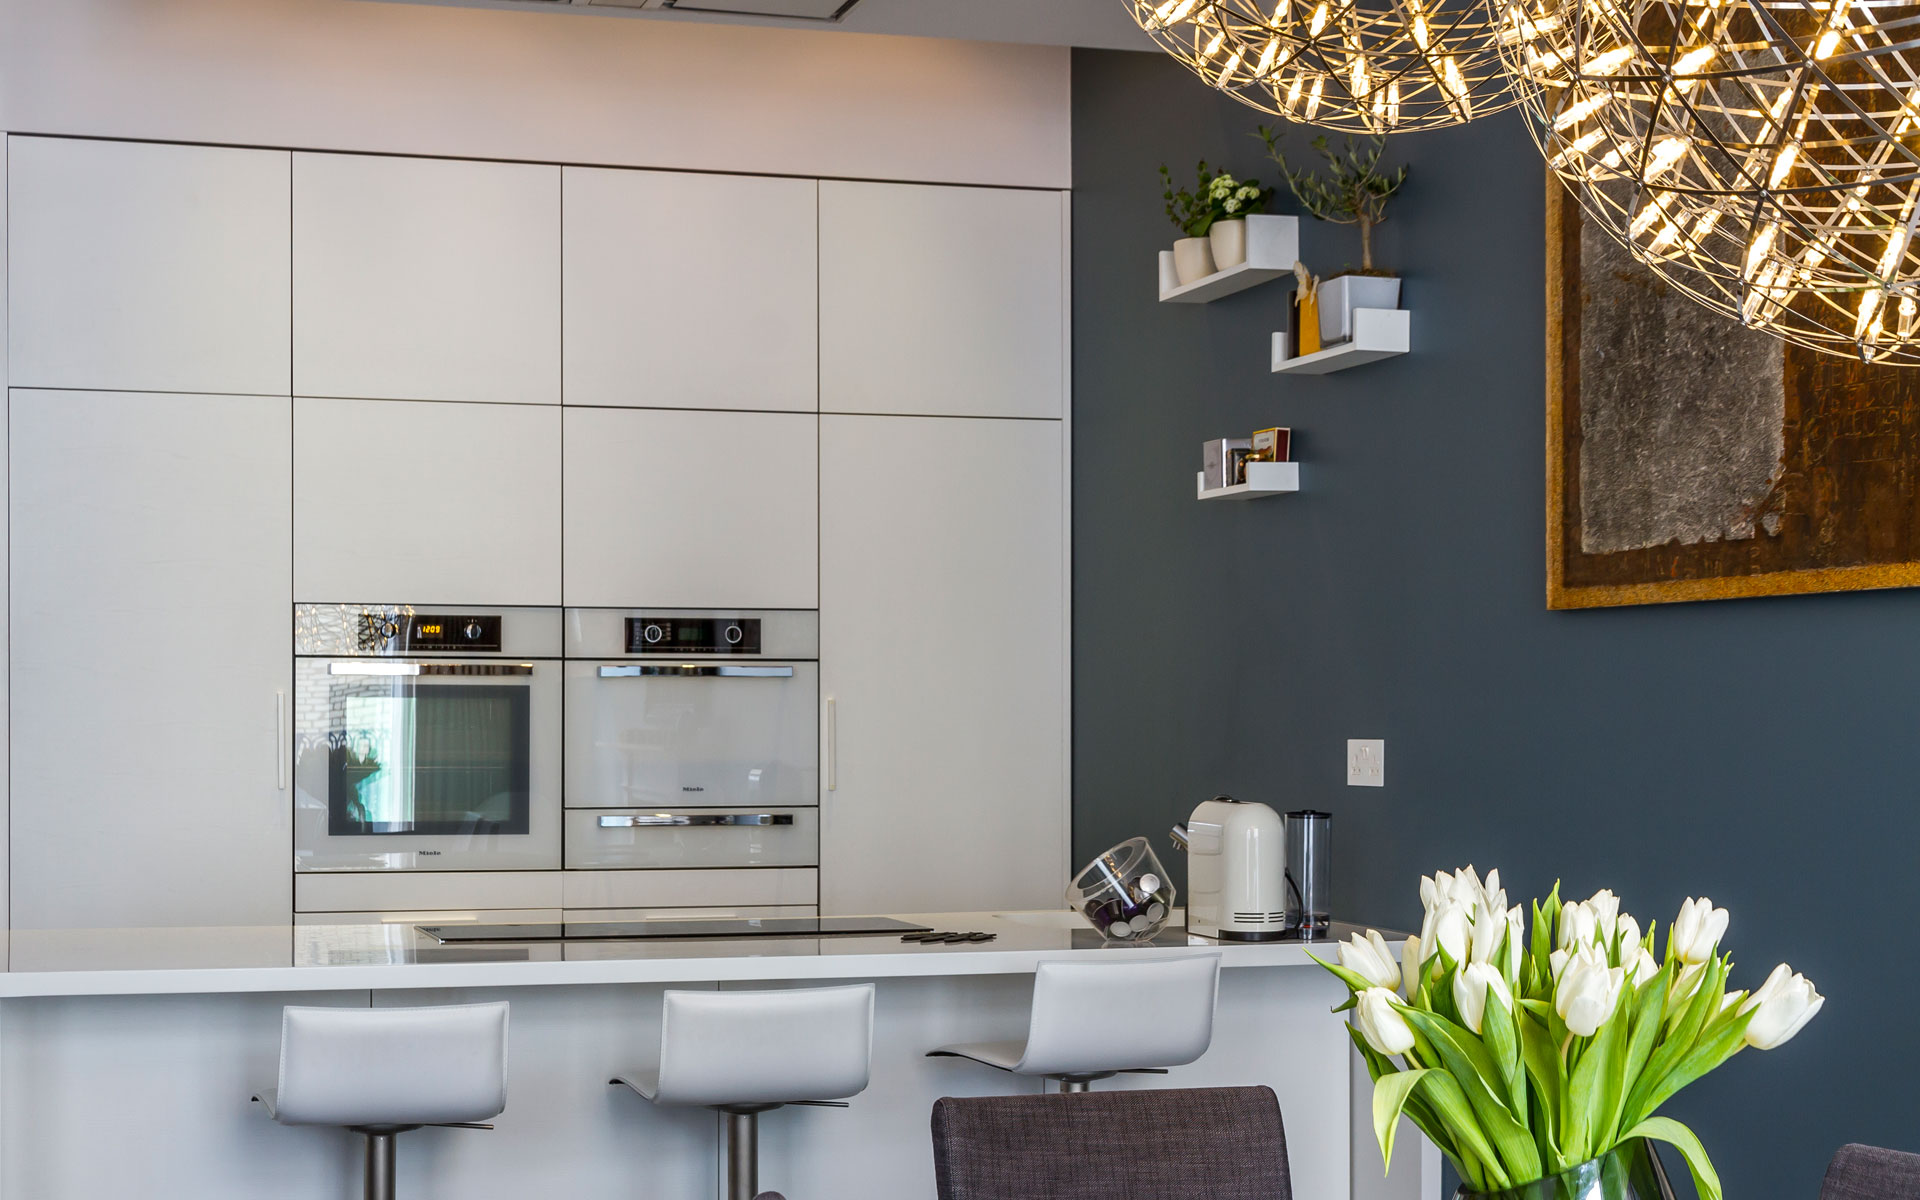 Earls Court Luxury Flat Kitchen - Katy Ellis Interior Design